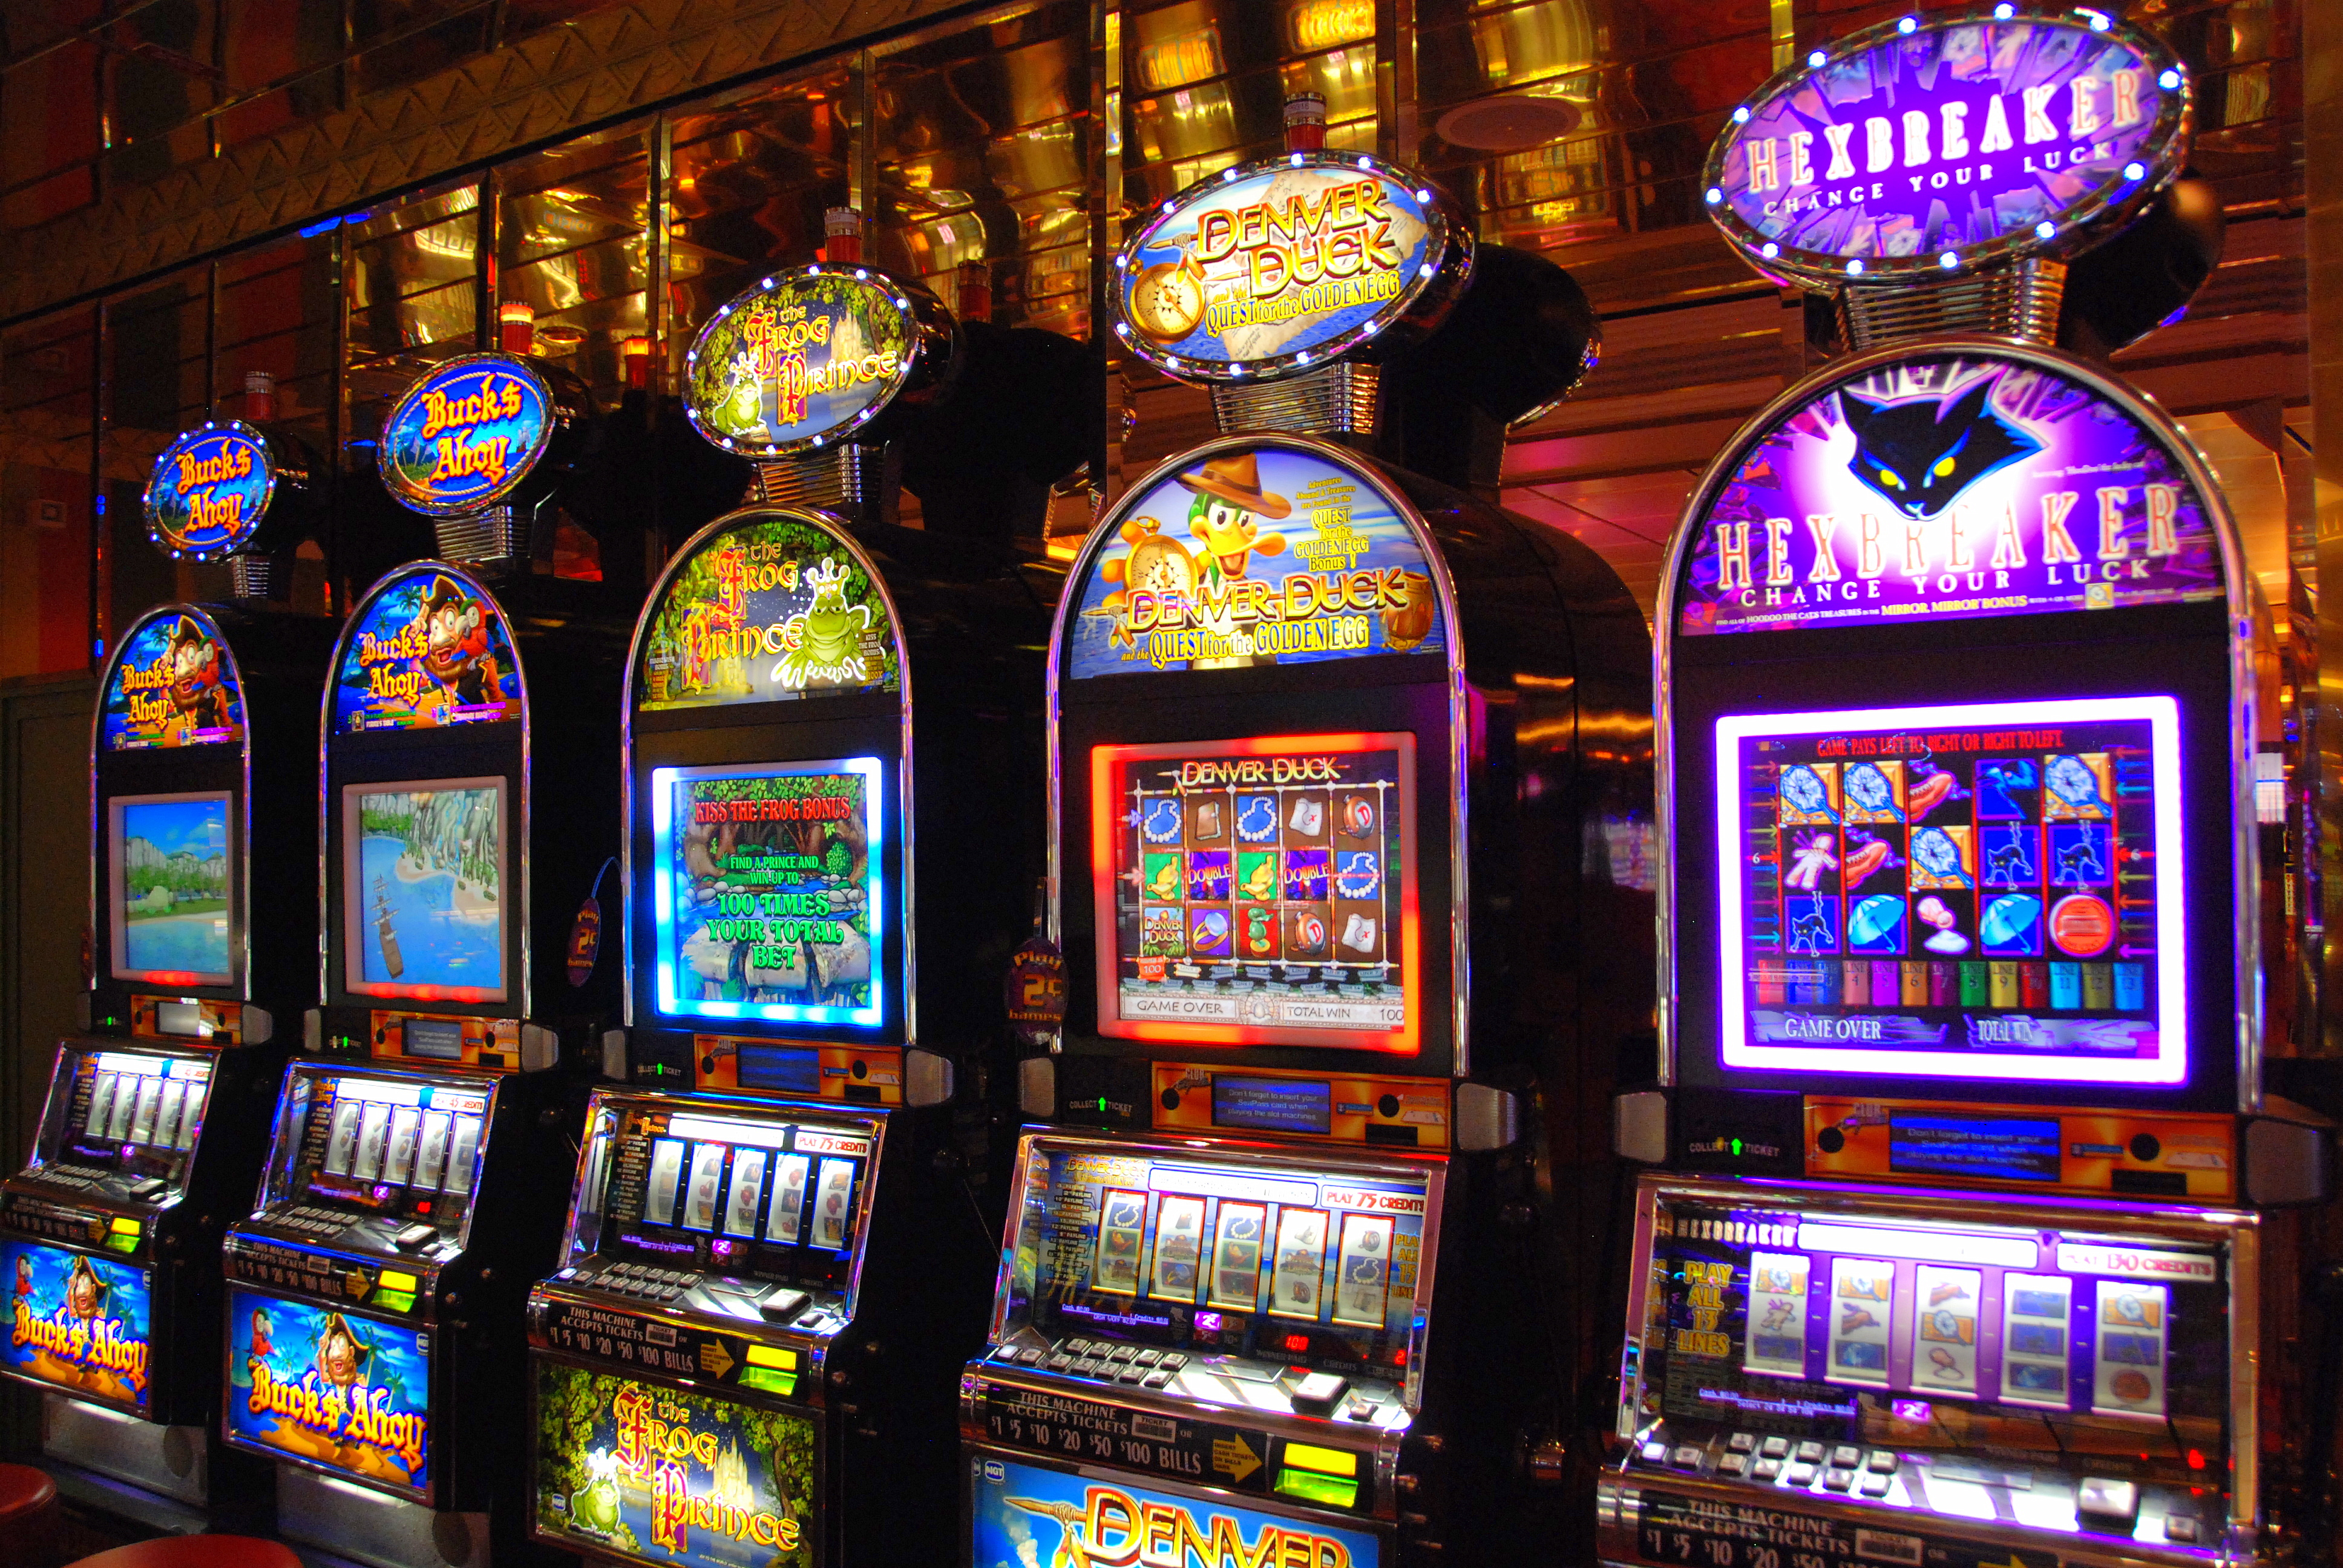 How Do Slot Machines Work